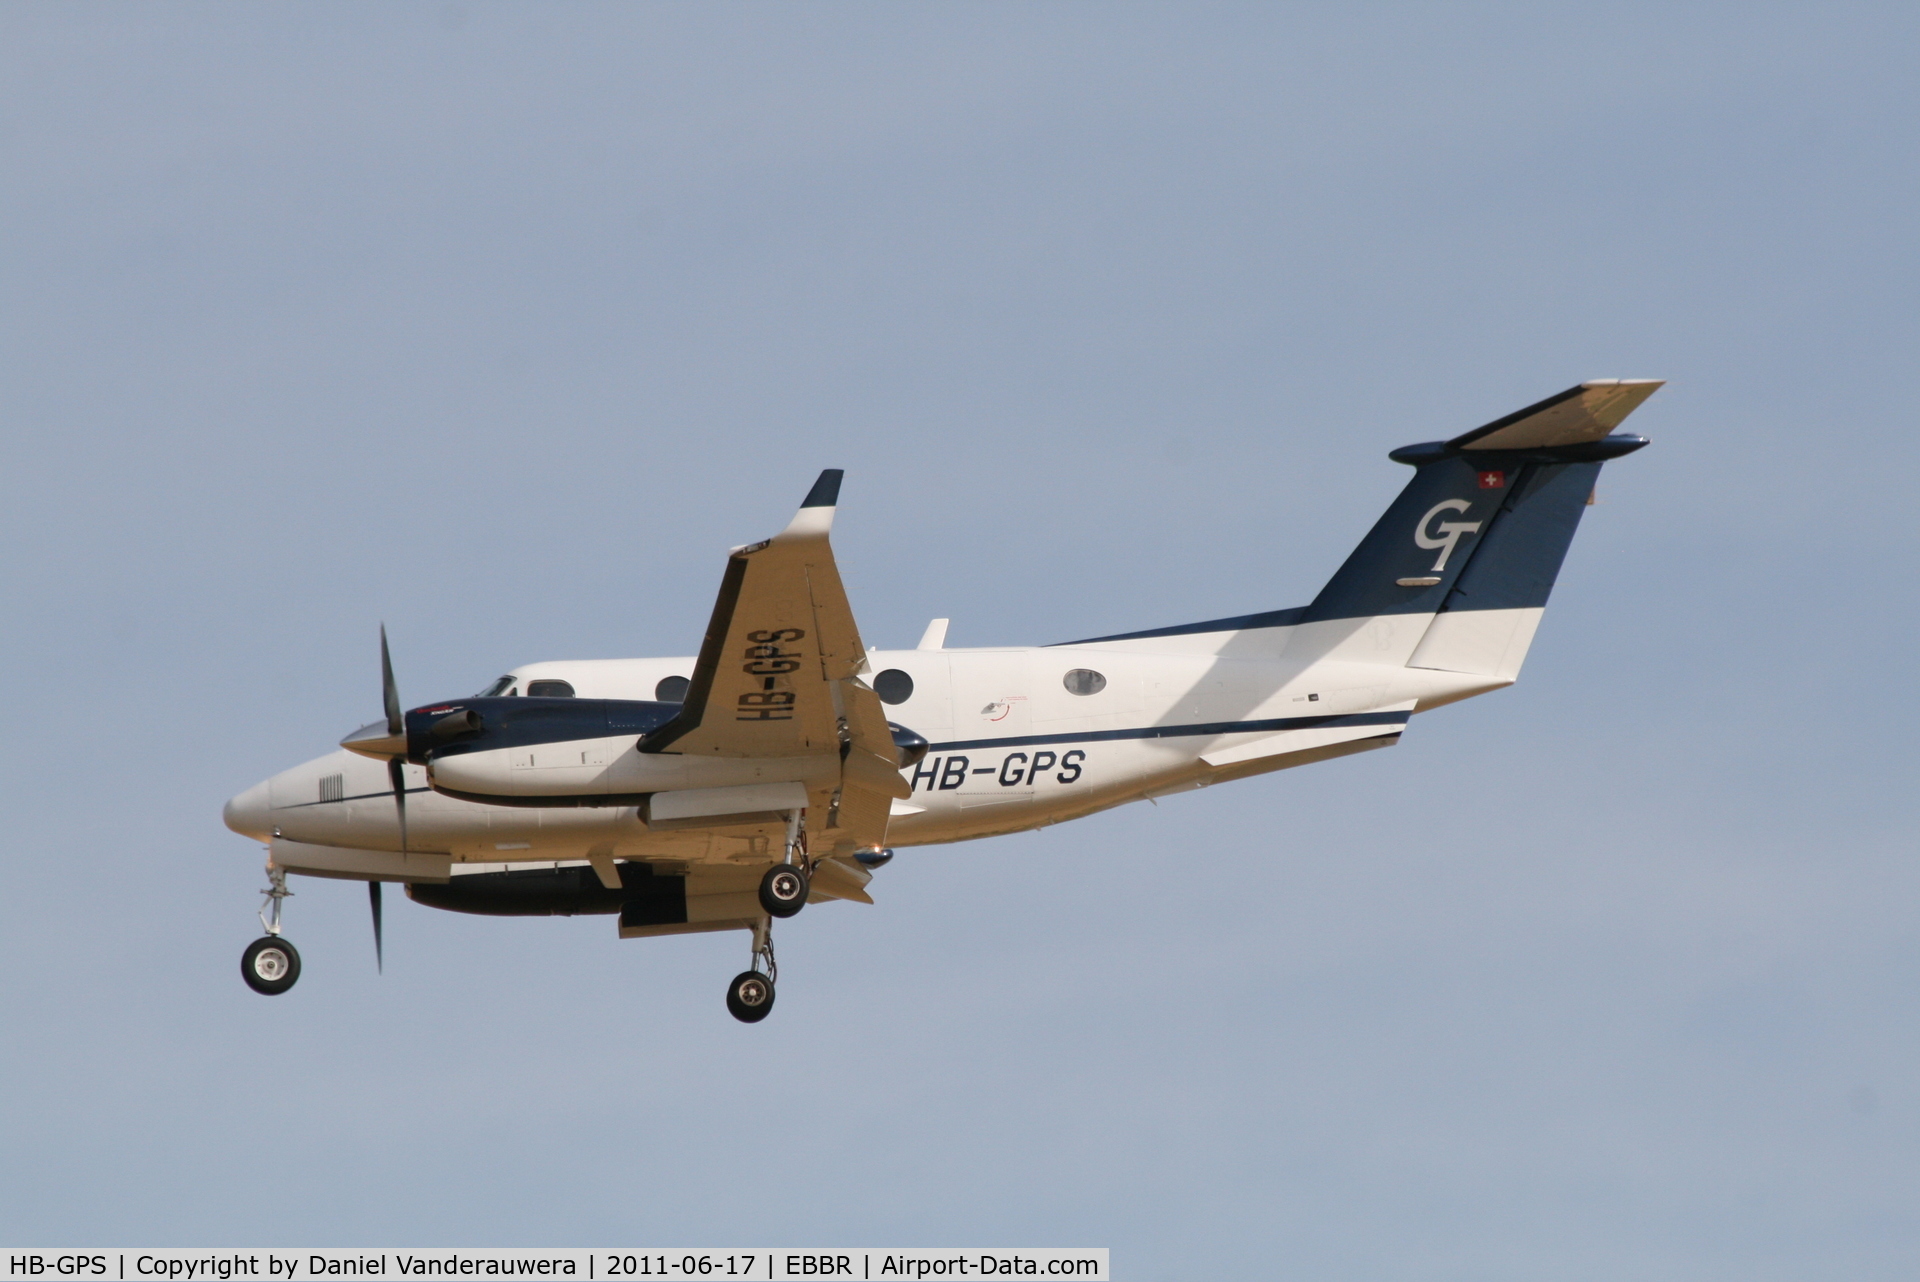 HB-GPS, 2009 Beechcraft King Air 200GT C/N BY-093, Descending to RWY 25L